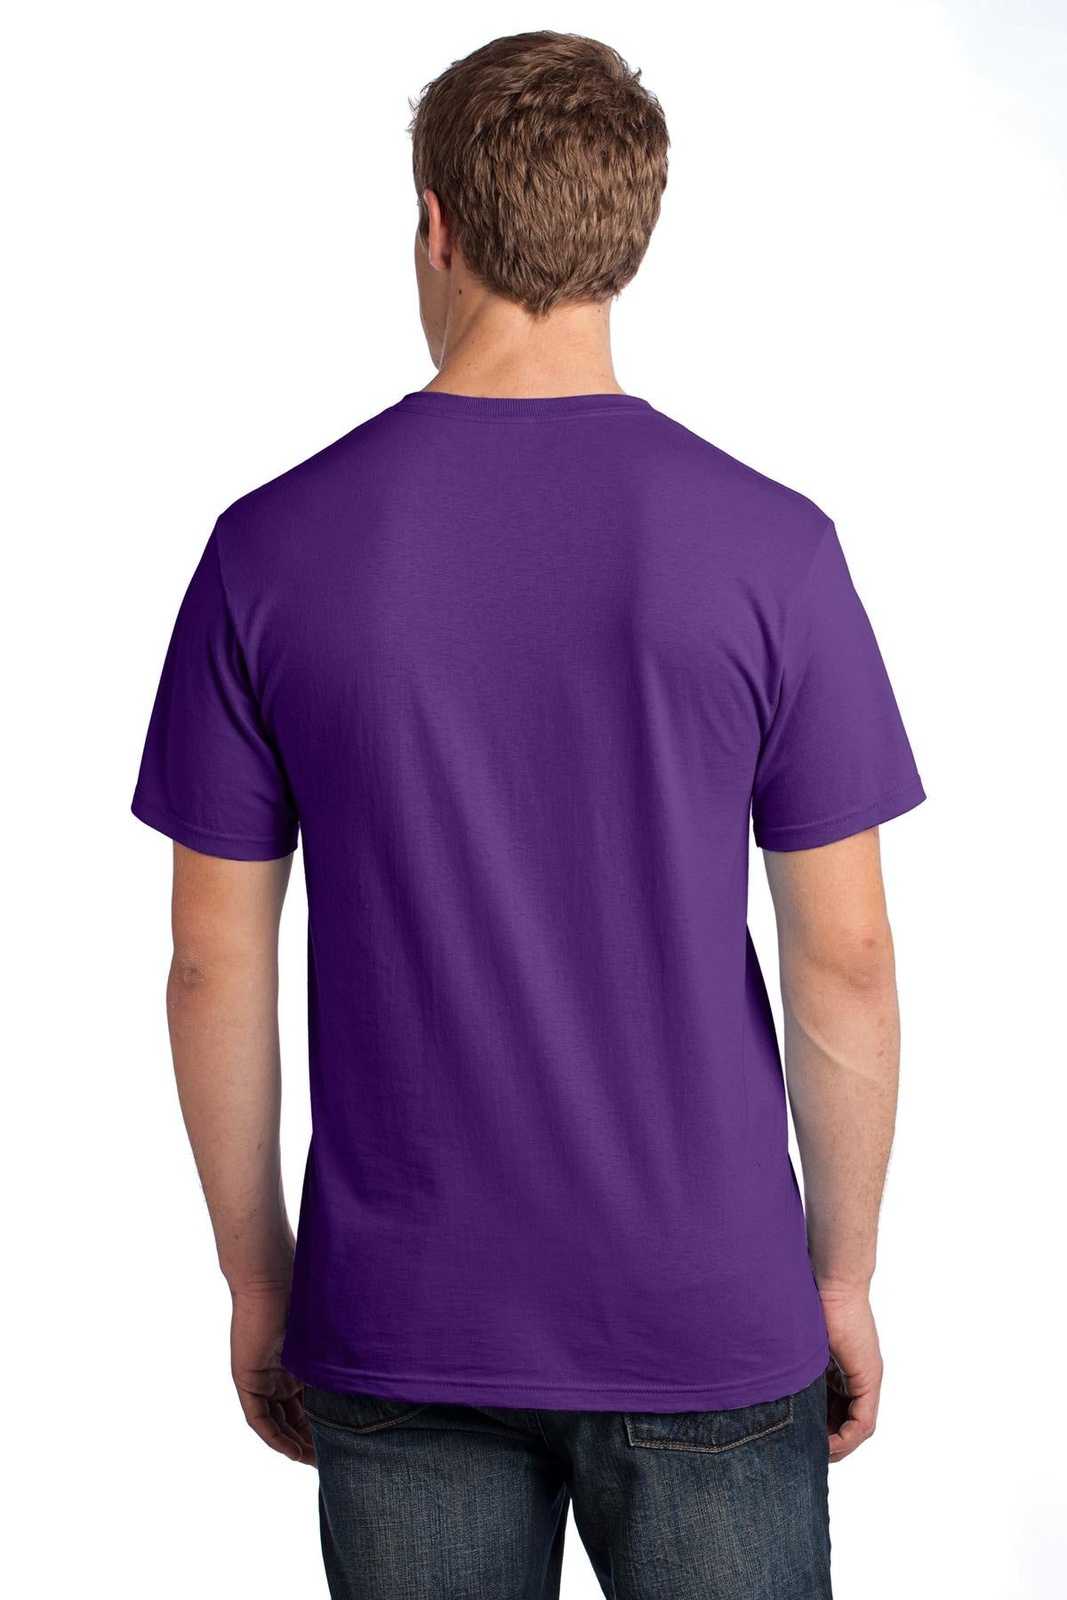 Fruit of the Loom 3930 HD Cotton 100% Cotton T-Shirt - Purple - HIT a Double